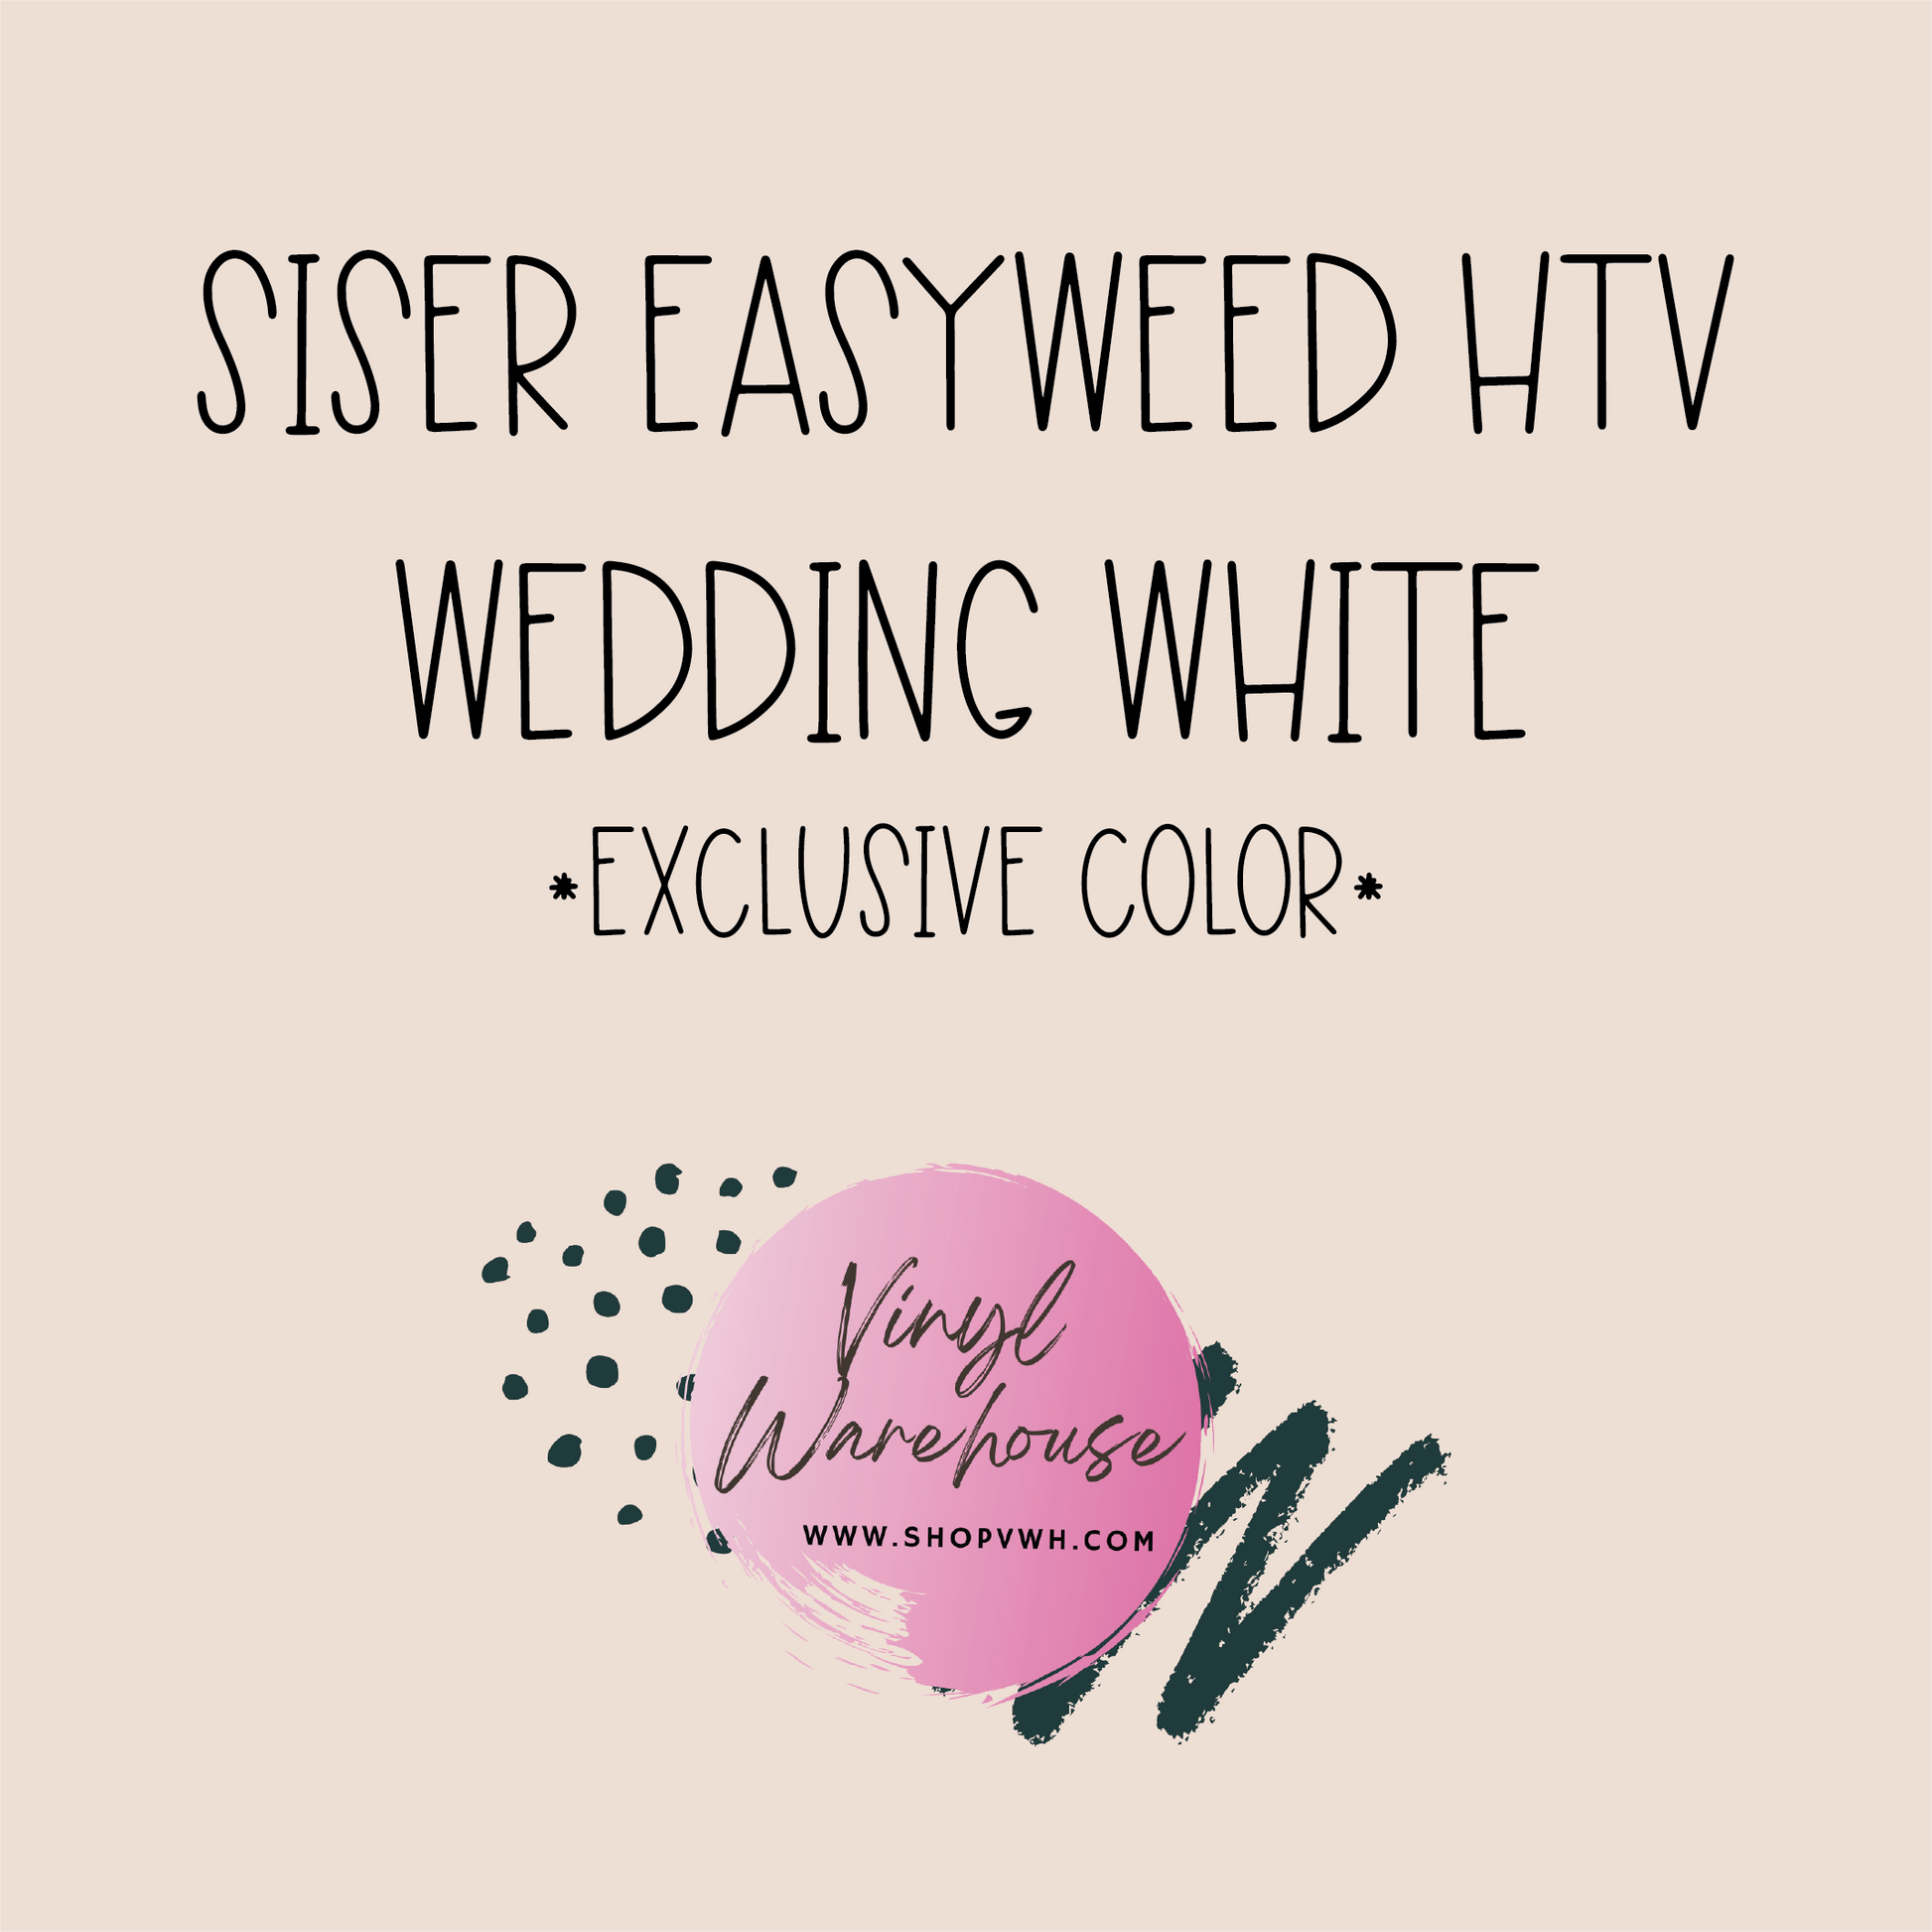 Wedding White Siser EasyWeed® HTV